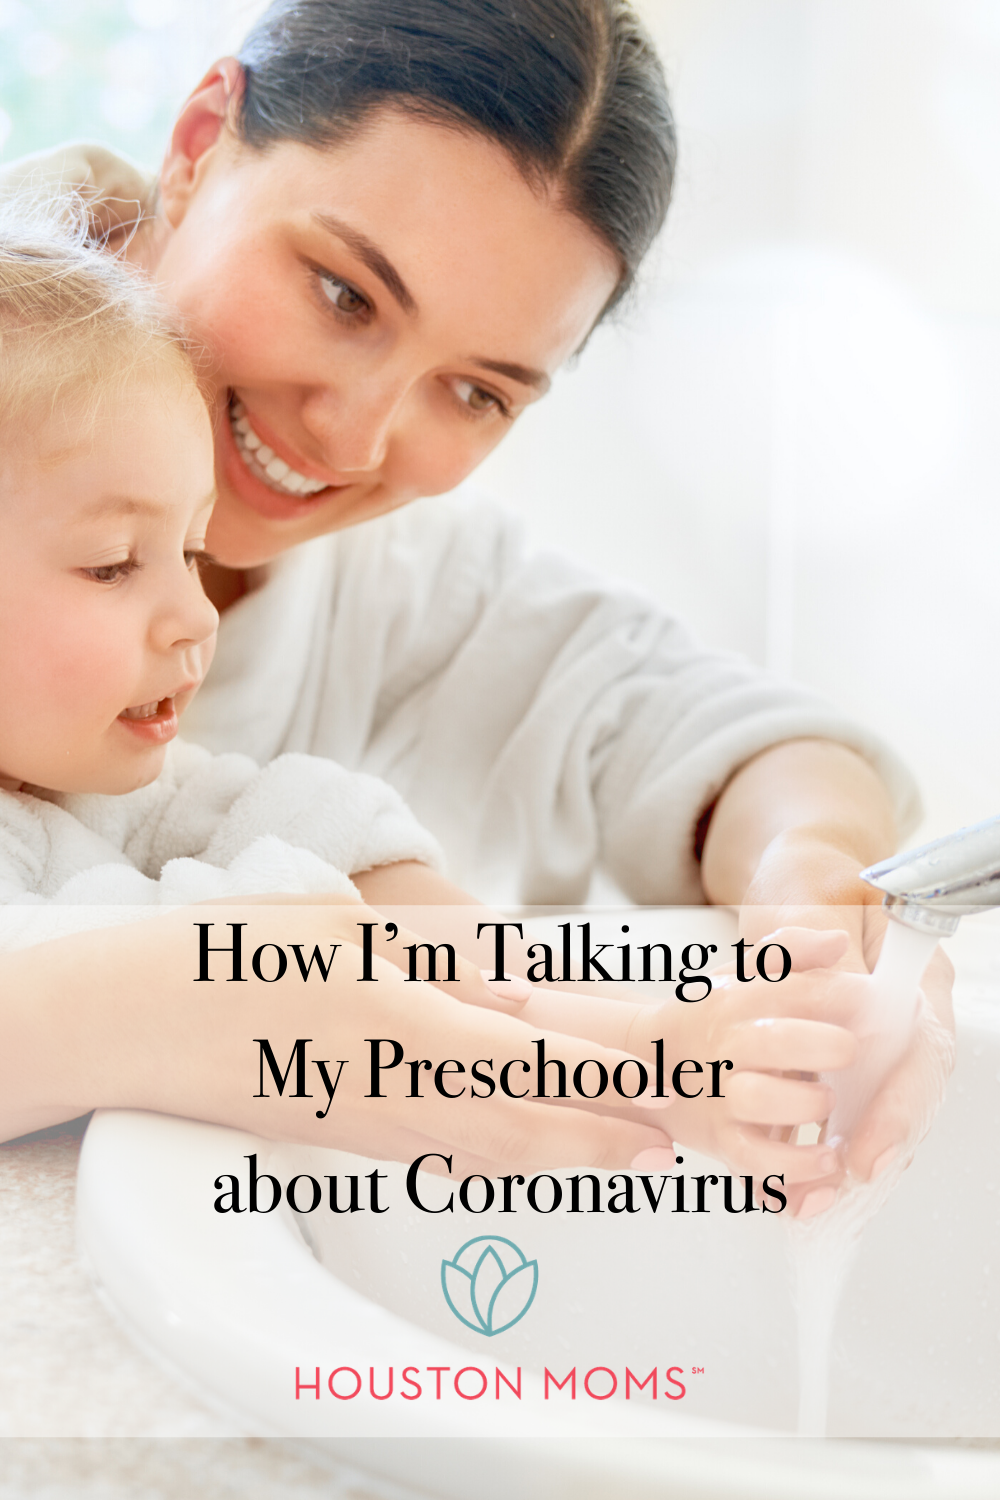 Houston Moms "How I'm Talking to My Preschooler about Coronavirus" #houstonmomsblog #momsaroundhouston #houstonmoms